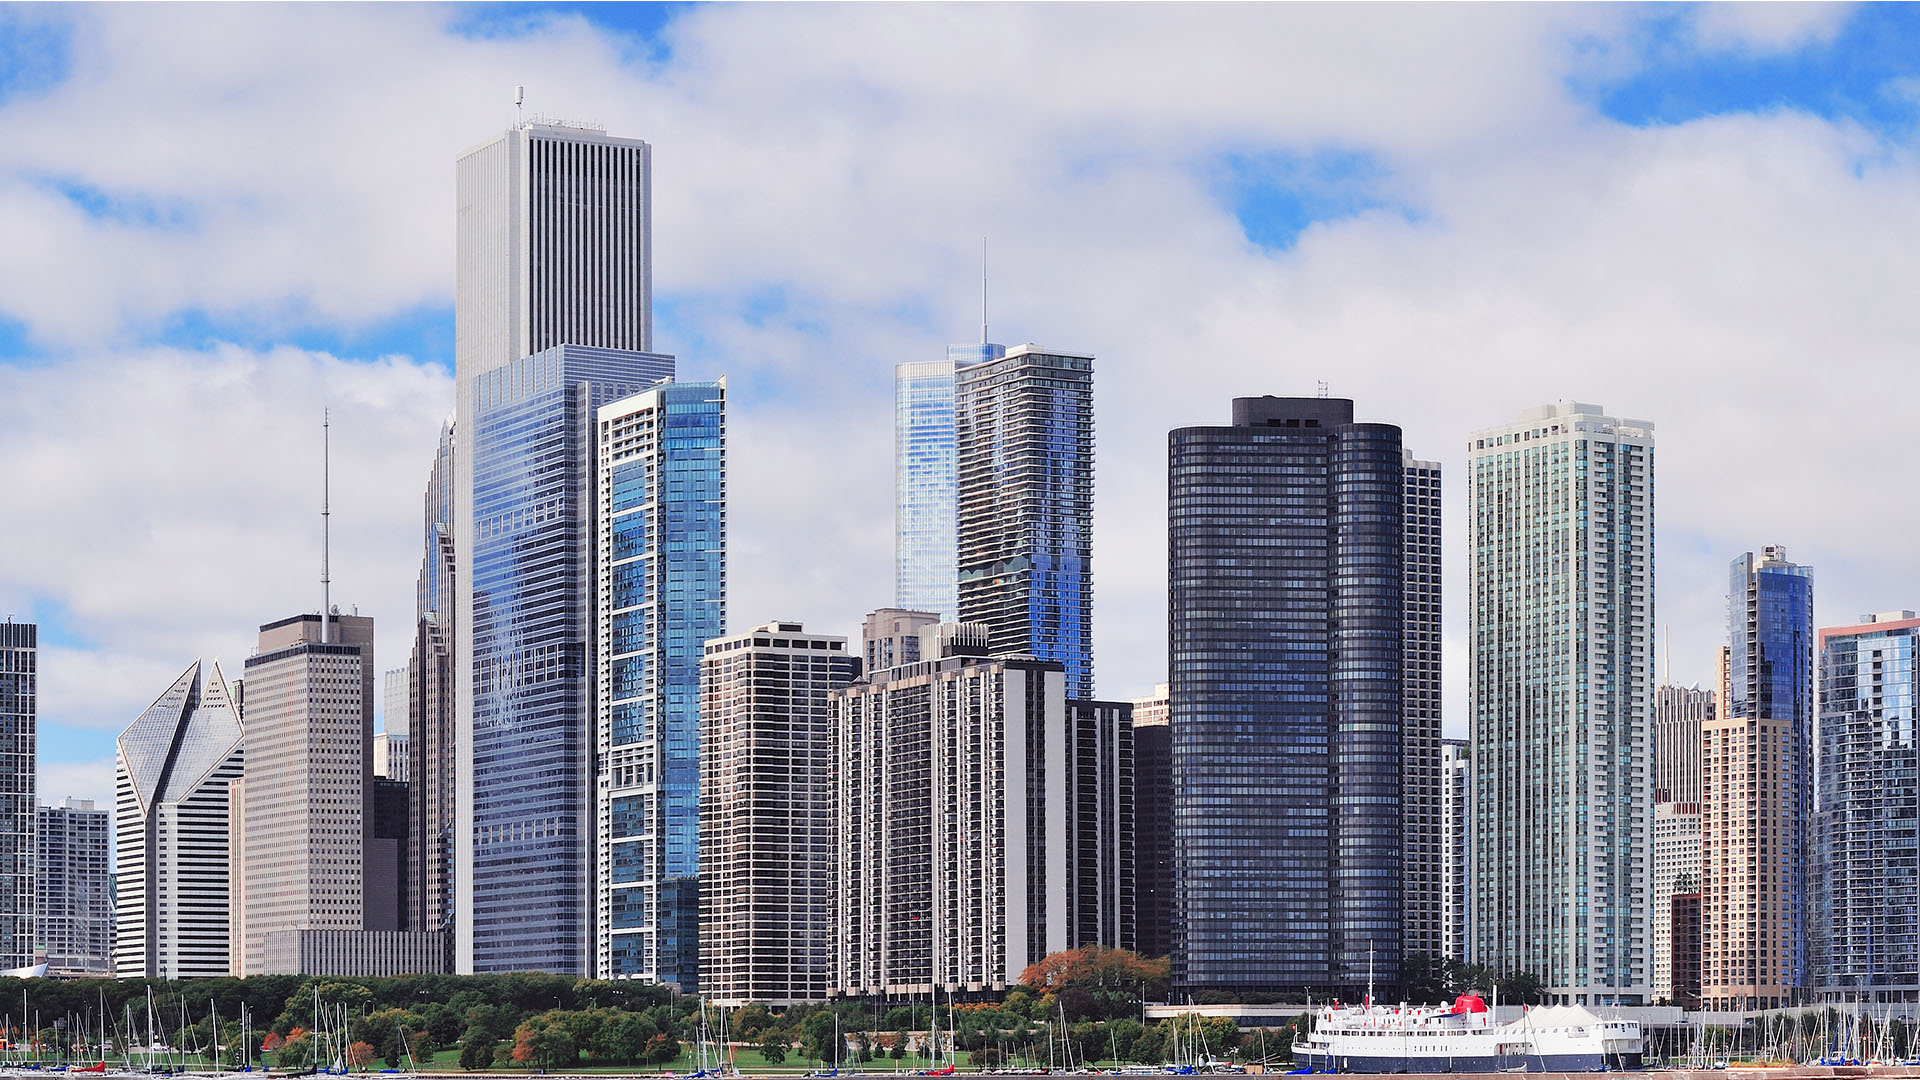 skyline of Chicago Illinois